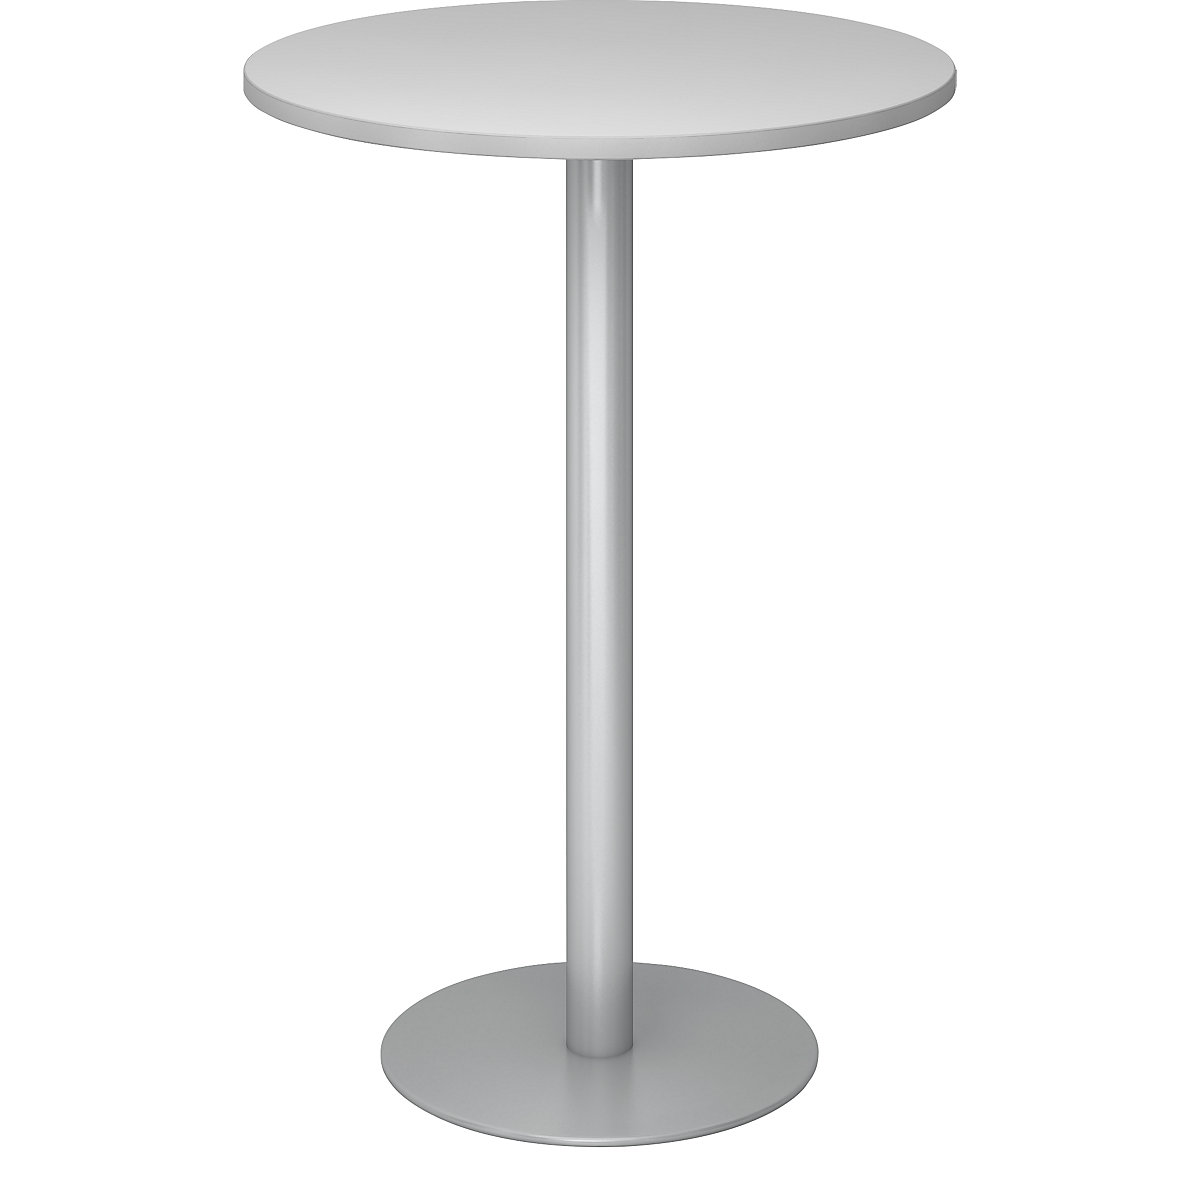 Pedestal table, Ø 800 mm, 1116 mm high, silver frame, tabletop in light grey-4